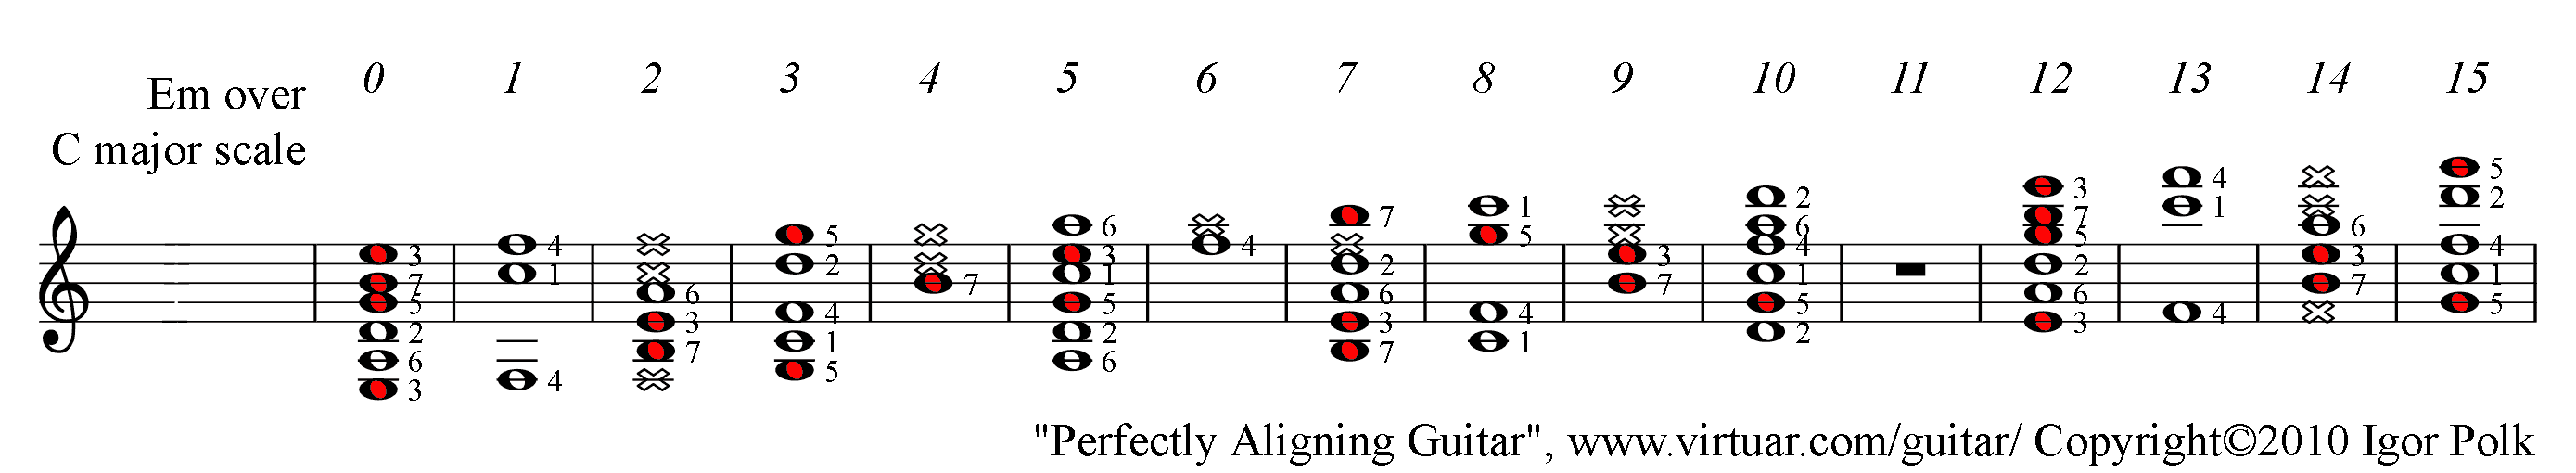 E minor chord over C major scale, guitar PAD